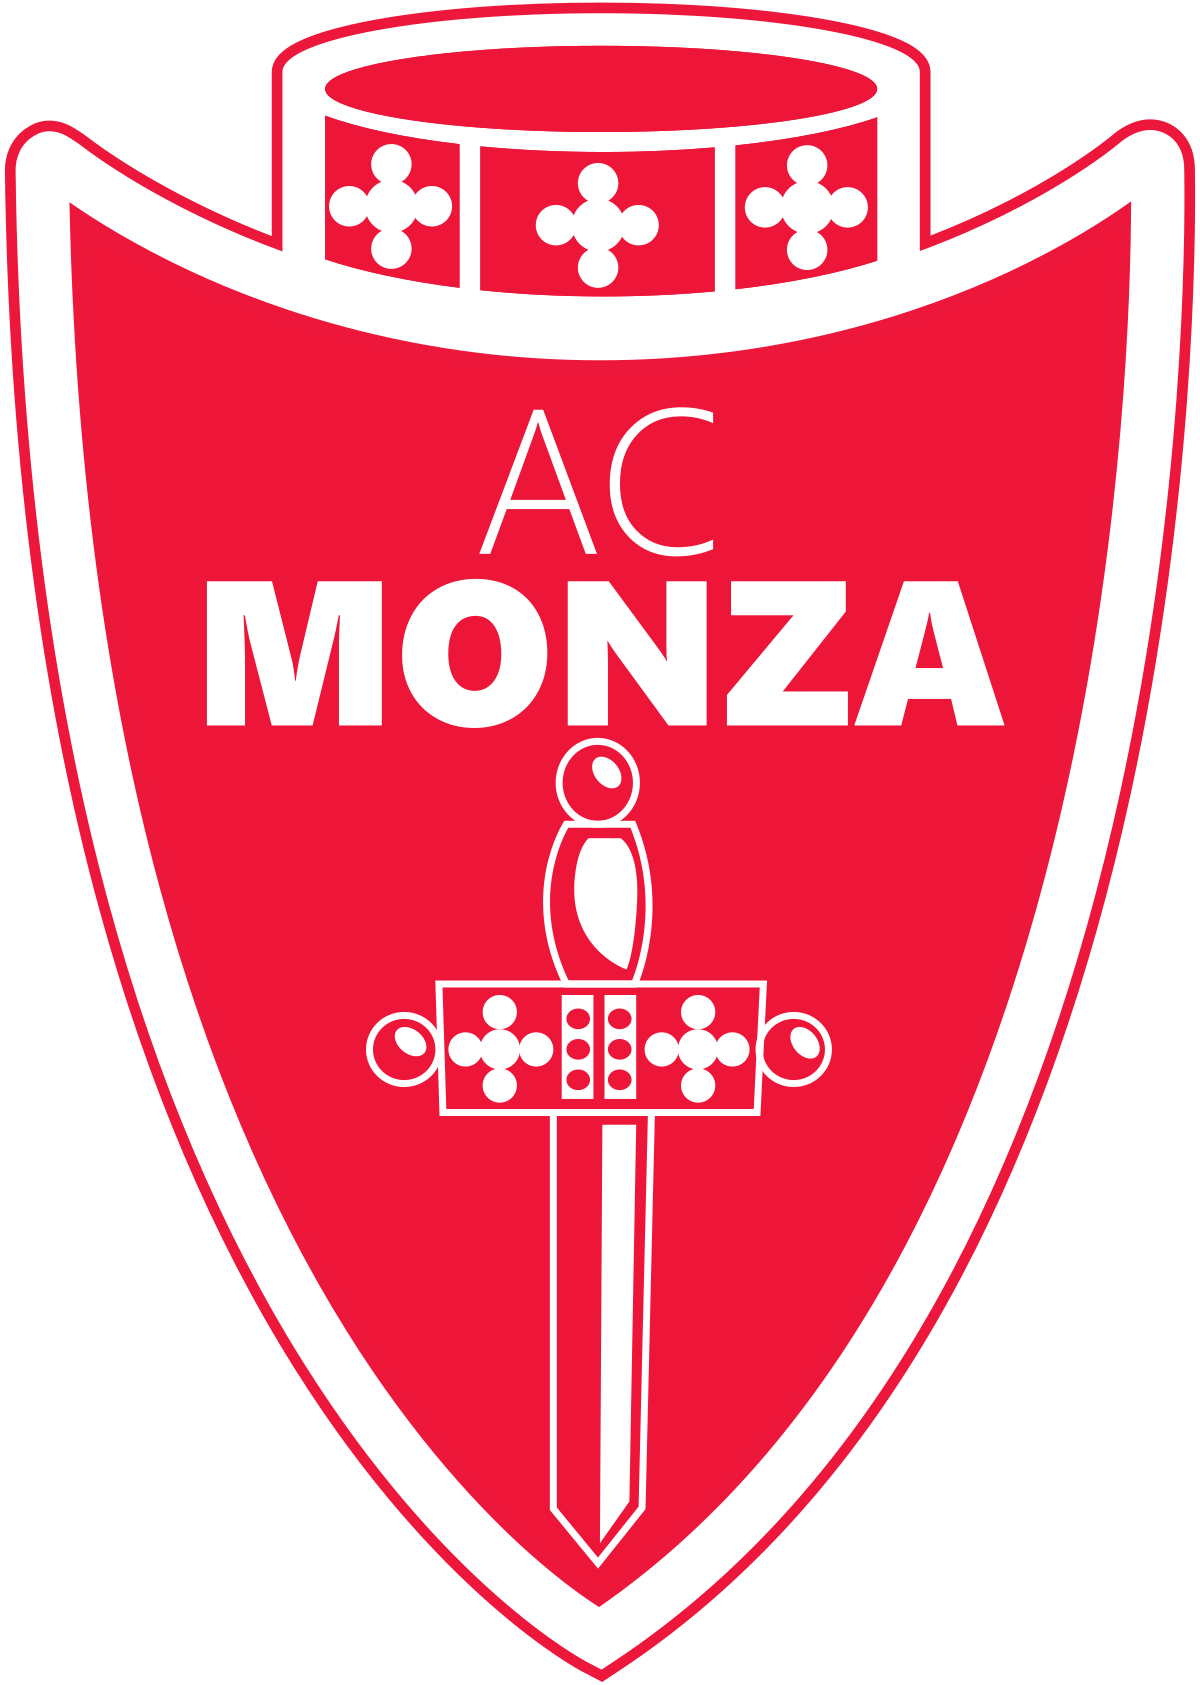 A.C. Monza logo 2019.svg